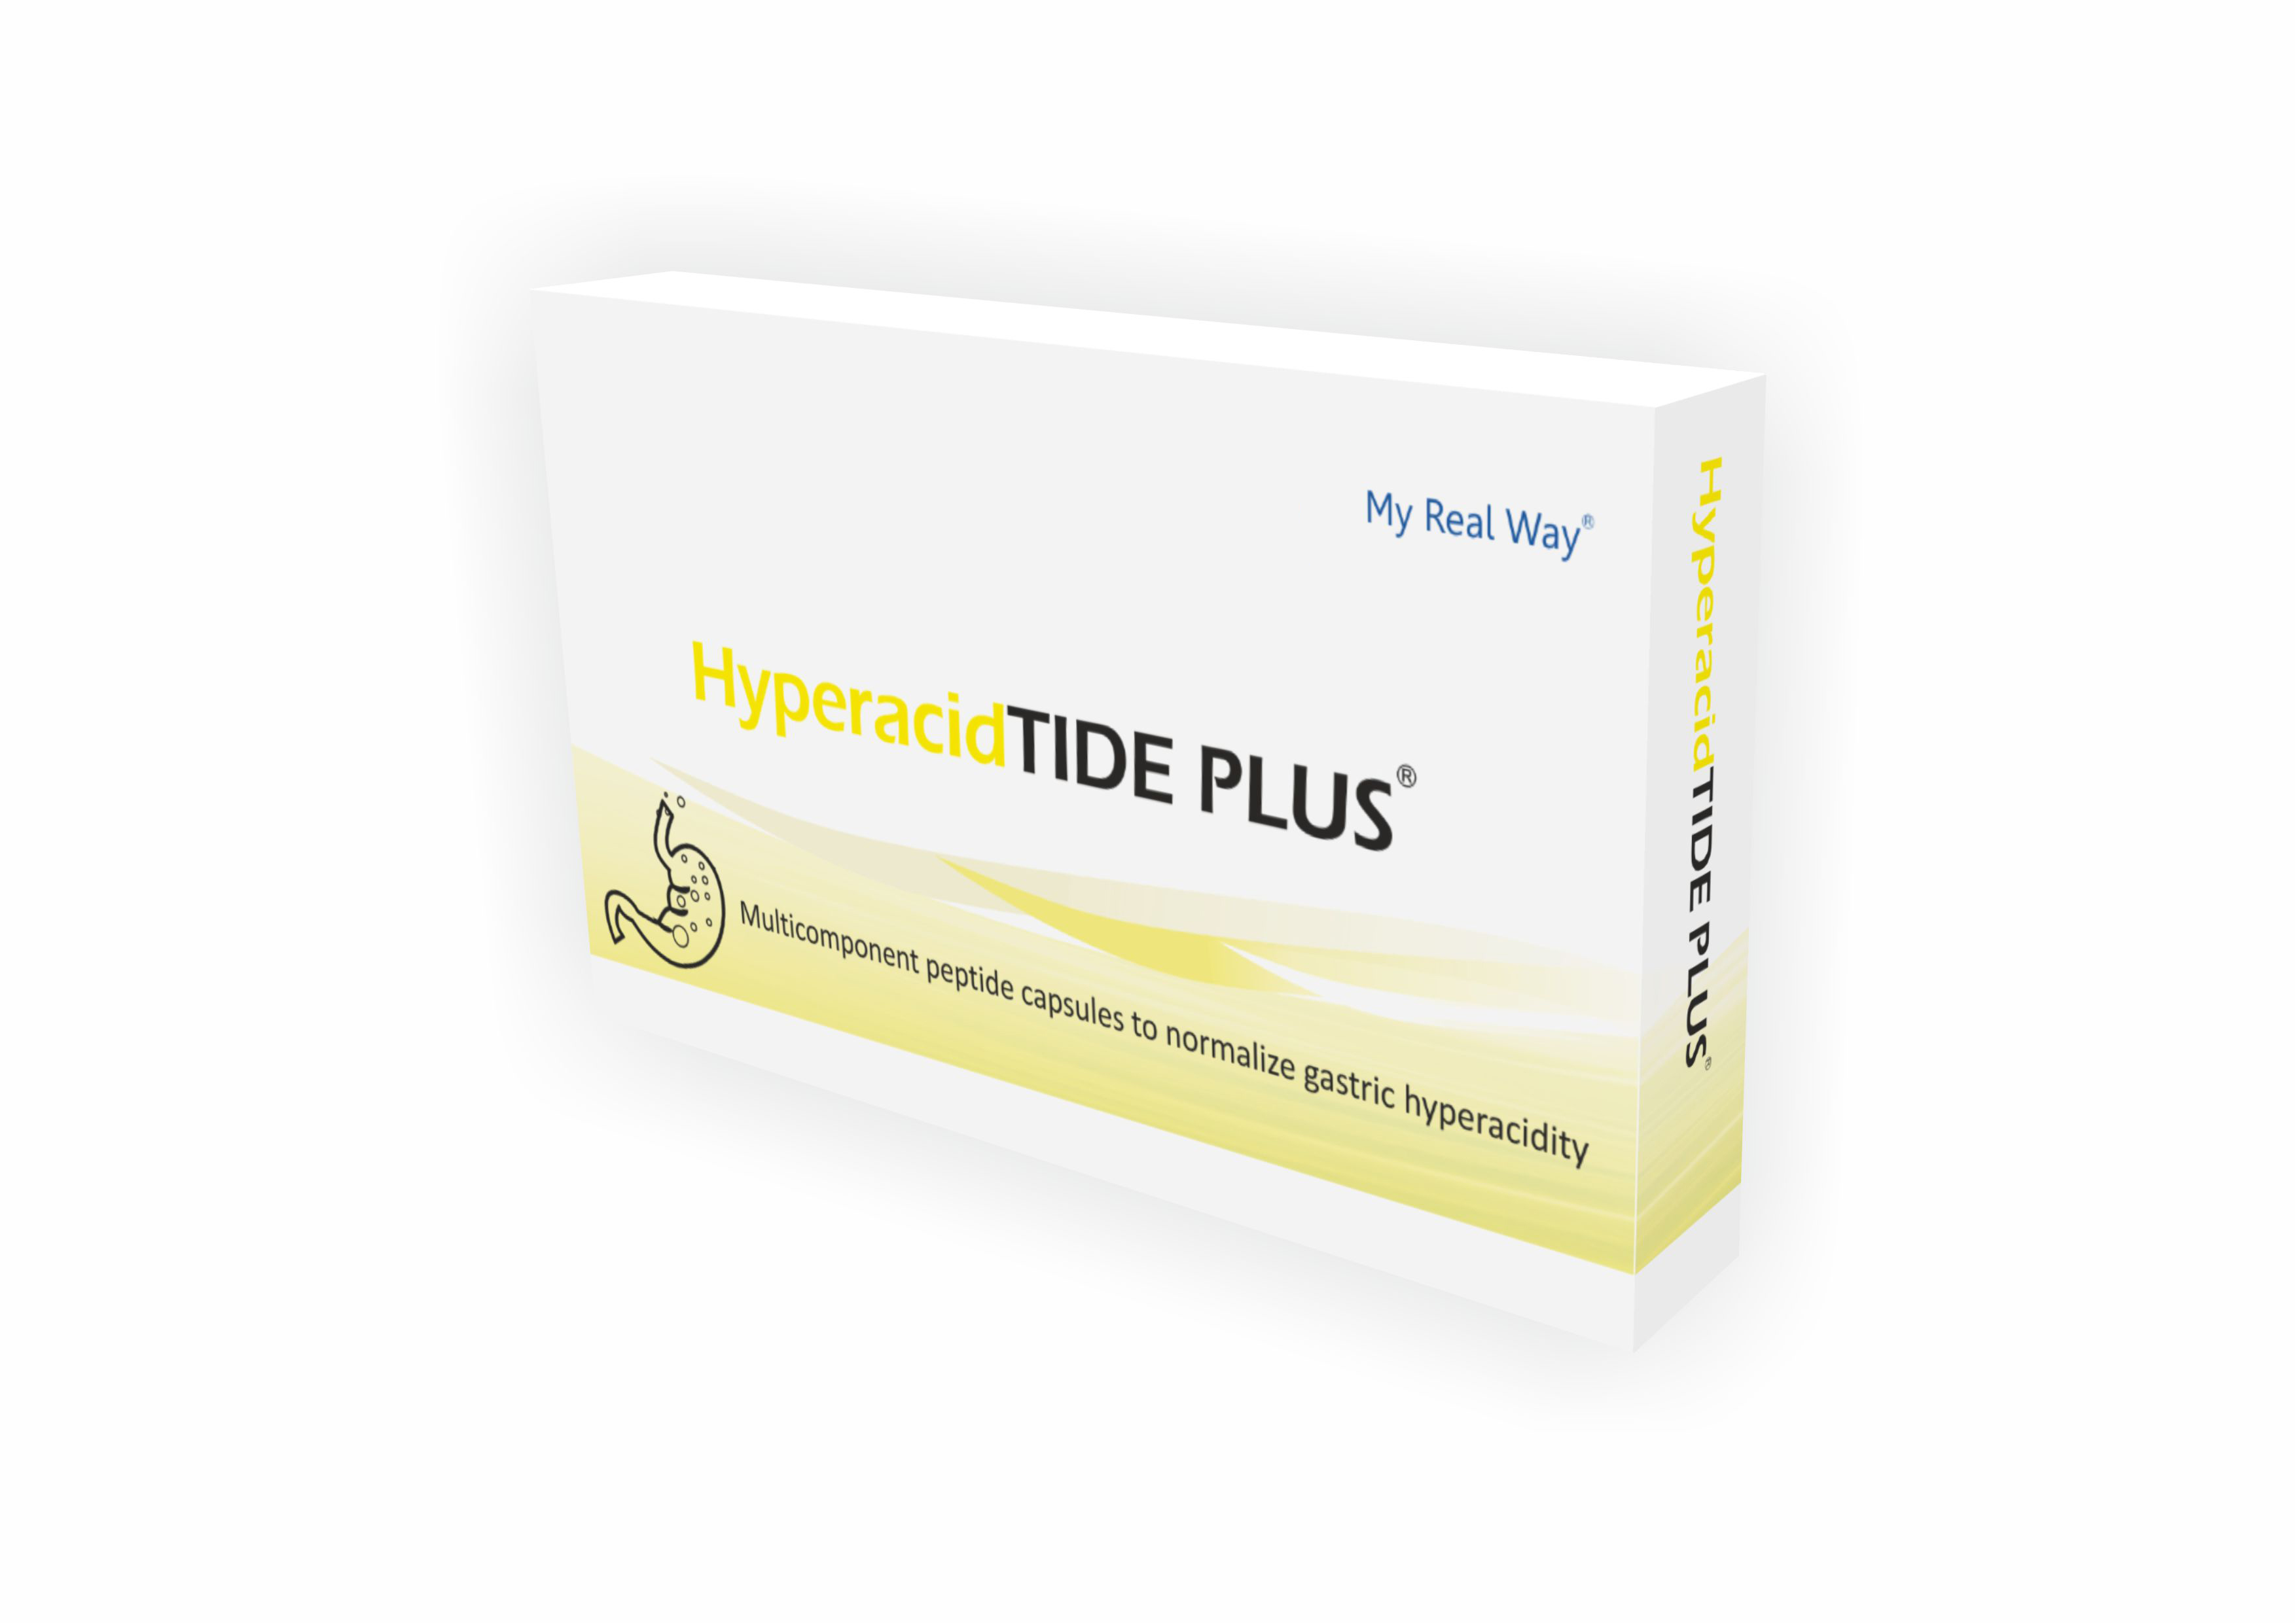 HyperacidTIDE PLUS